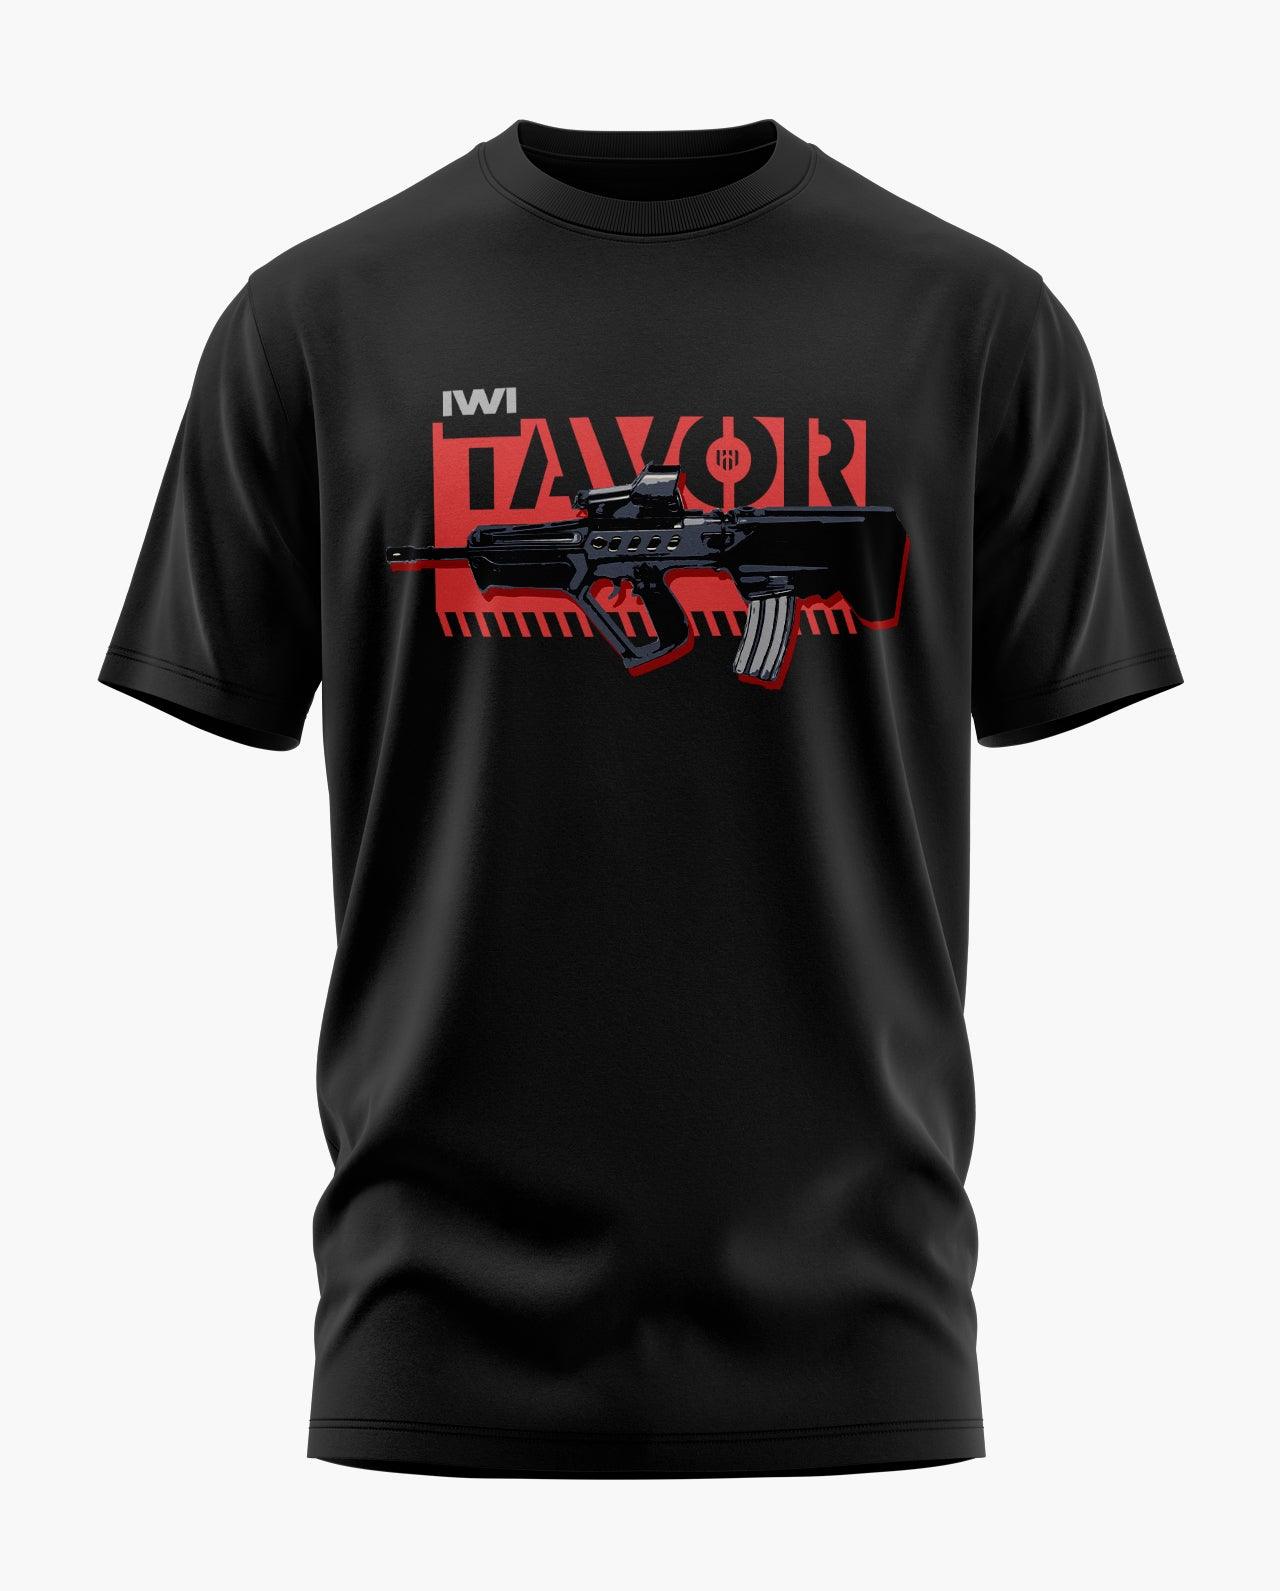 IWI Tavor T-Shirt - Aero Armour